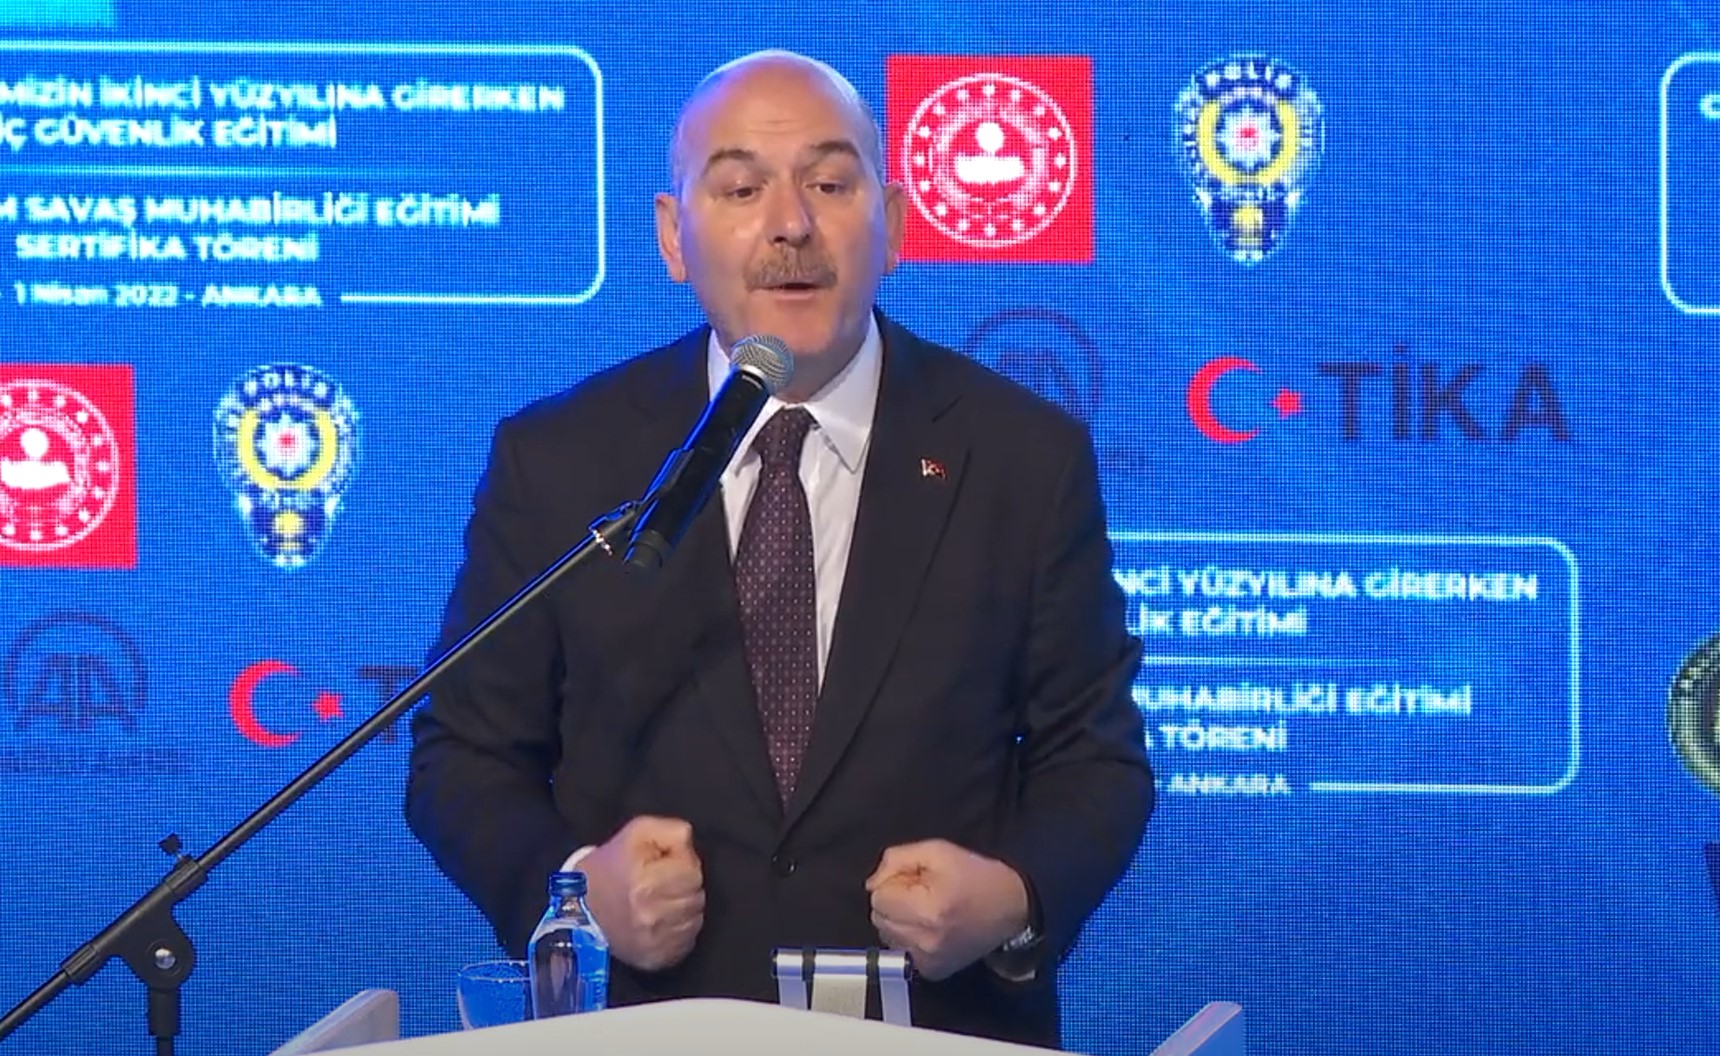 turco-interior-ministro-suleyman-soylu-turquia-taxa-frontex-agencia-fronteira-uniao-europeia-organizacao-terrorista